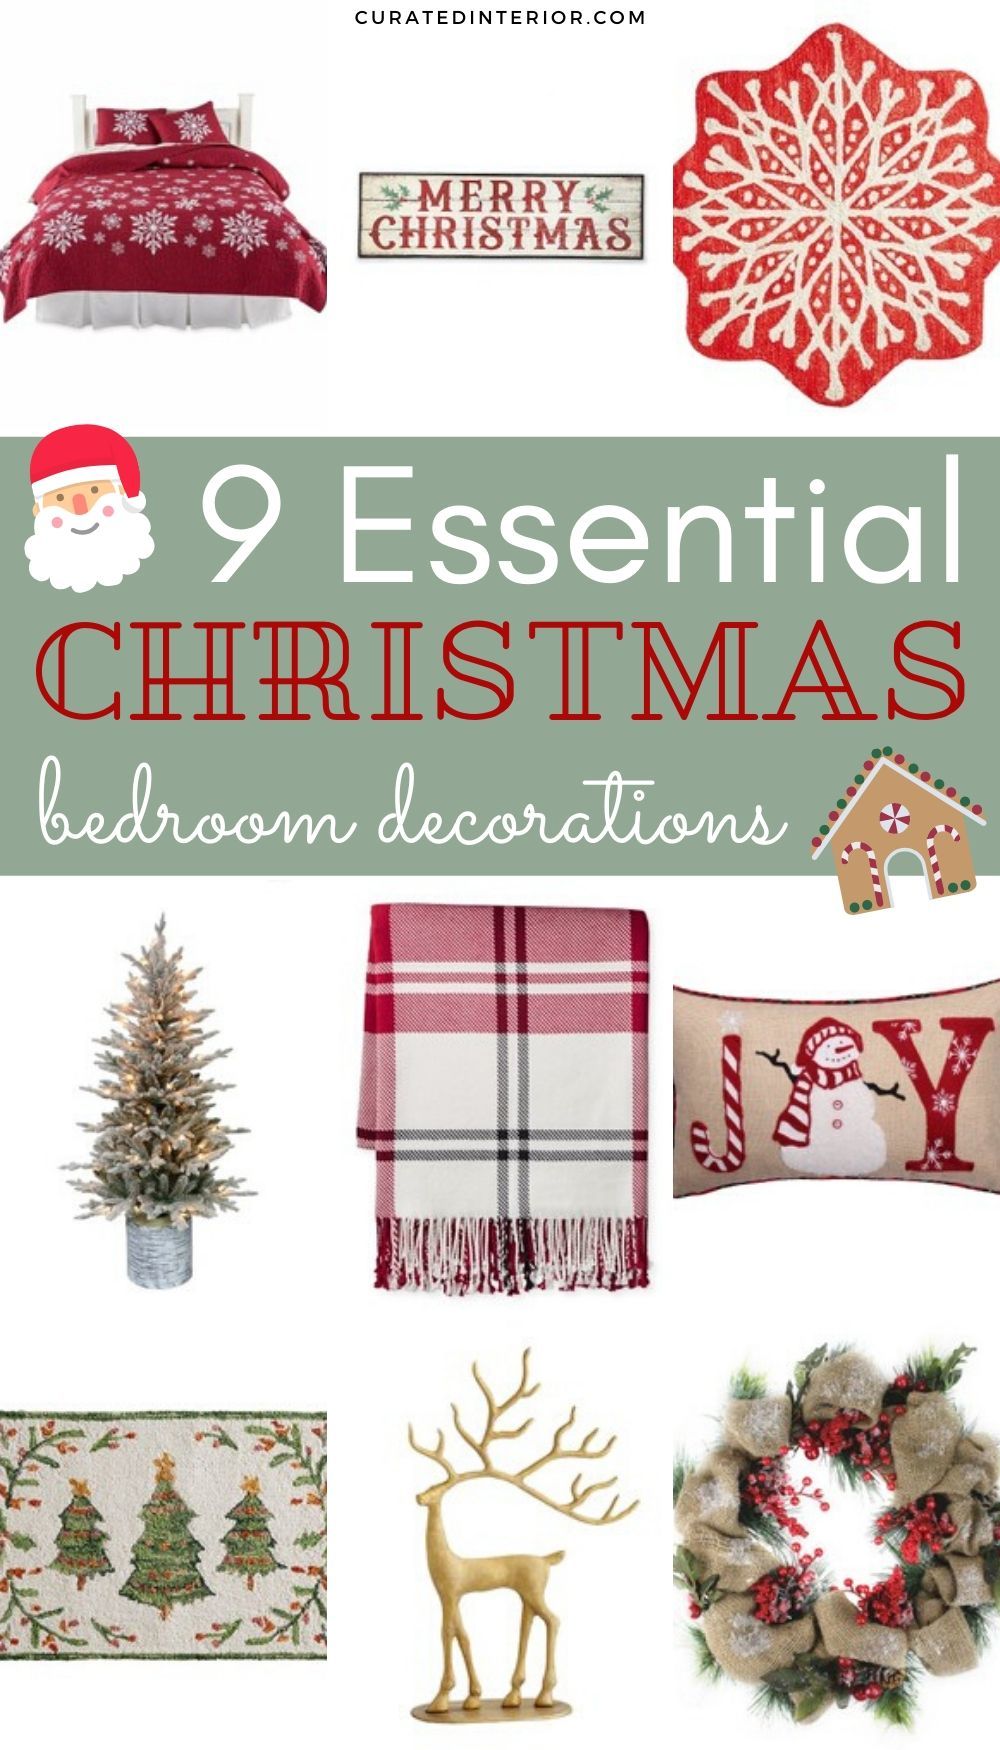 9 Essential Christmas Bedroom Decorations